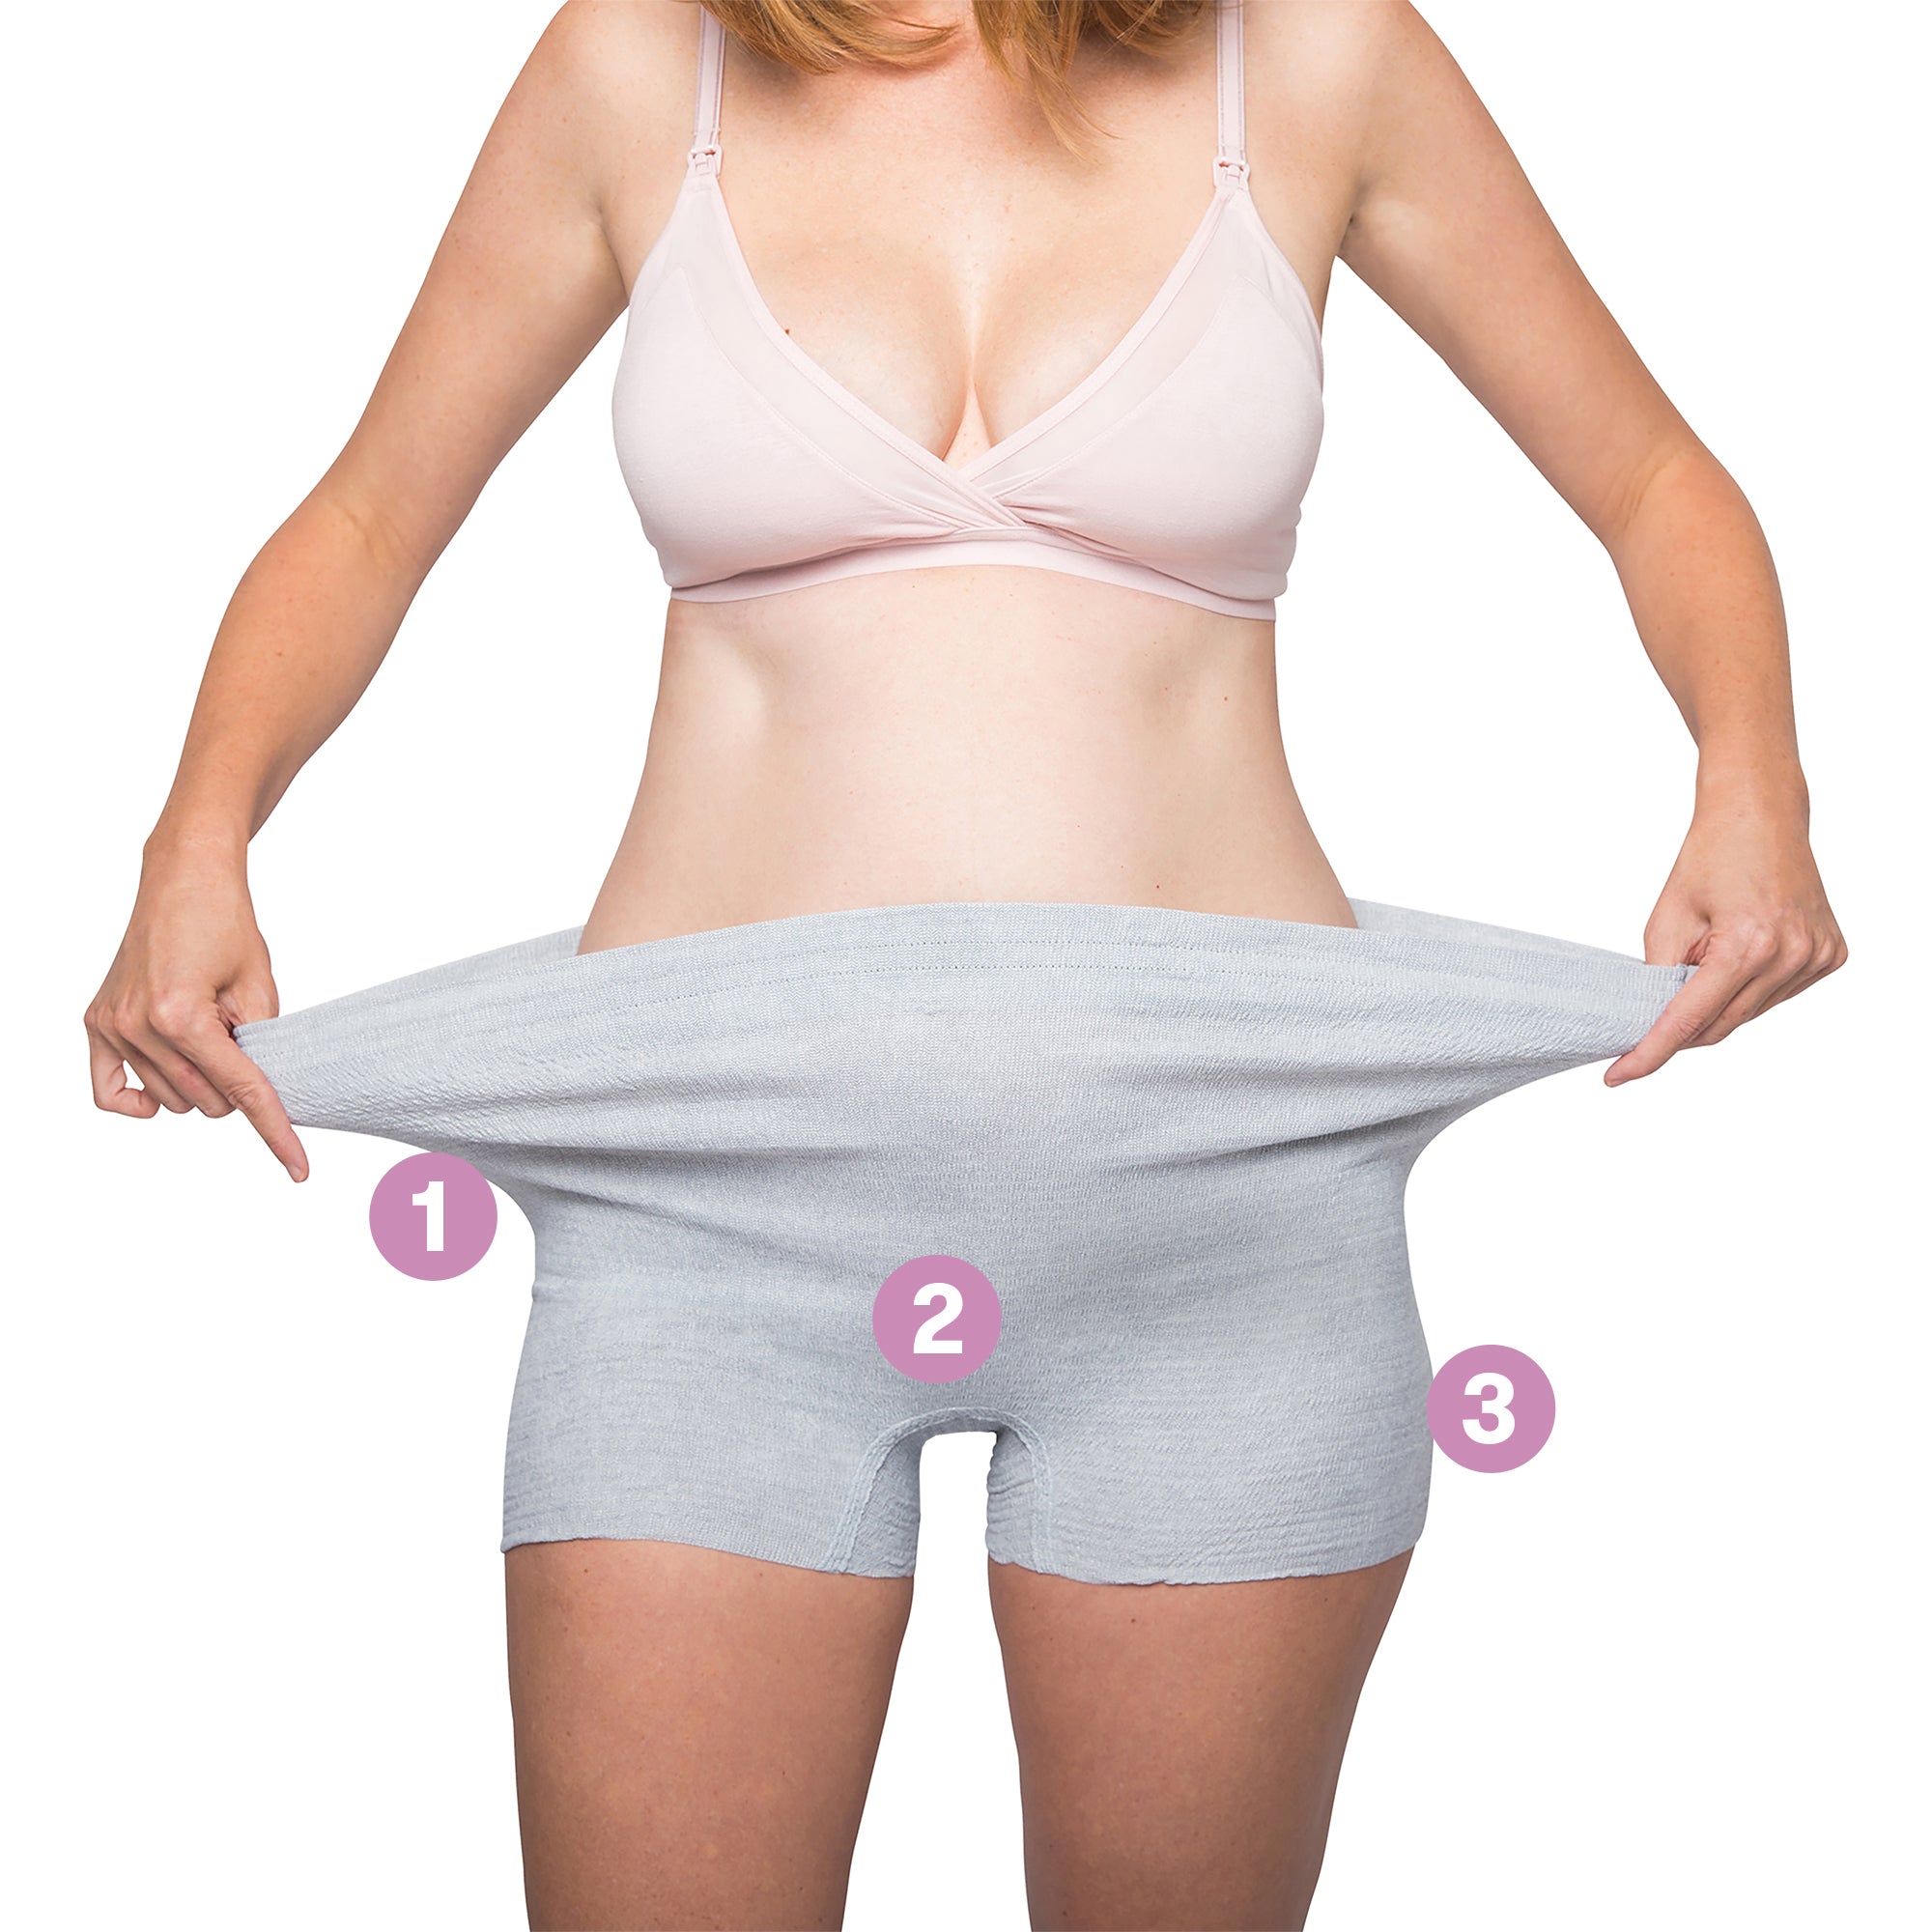 Mesh Underwear Postpartum 4 Count Disposable Postpartum Underwear Hospital  Mesh Panties for Post C-Section, Maternity Briefs - Washable